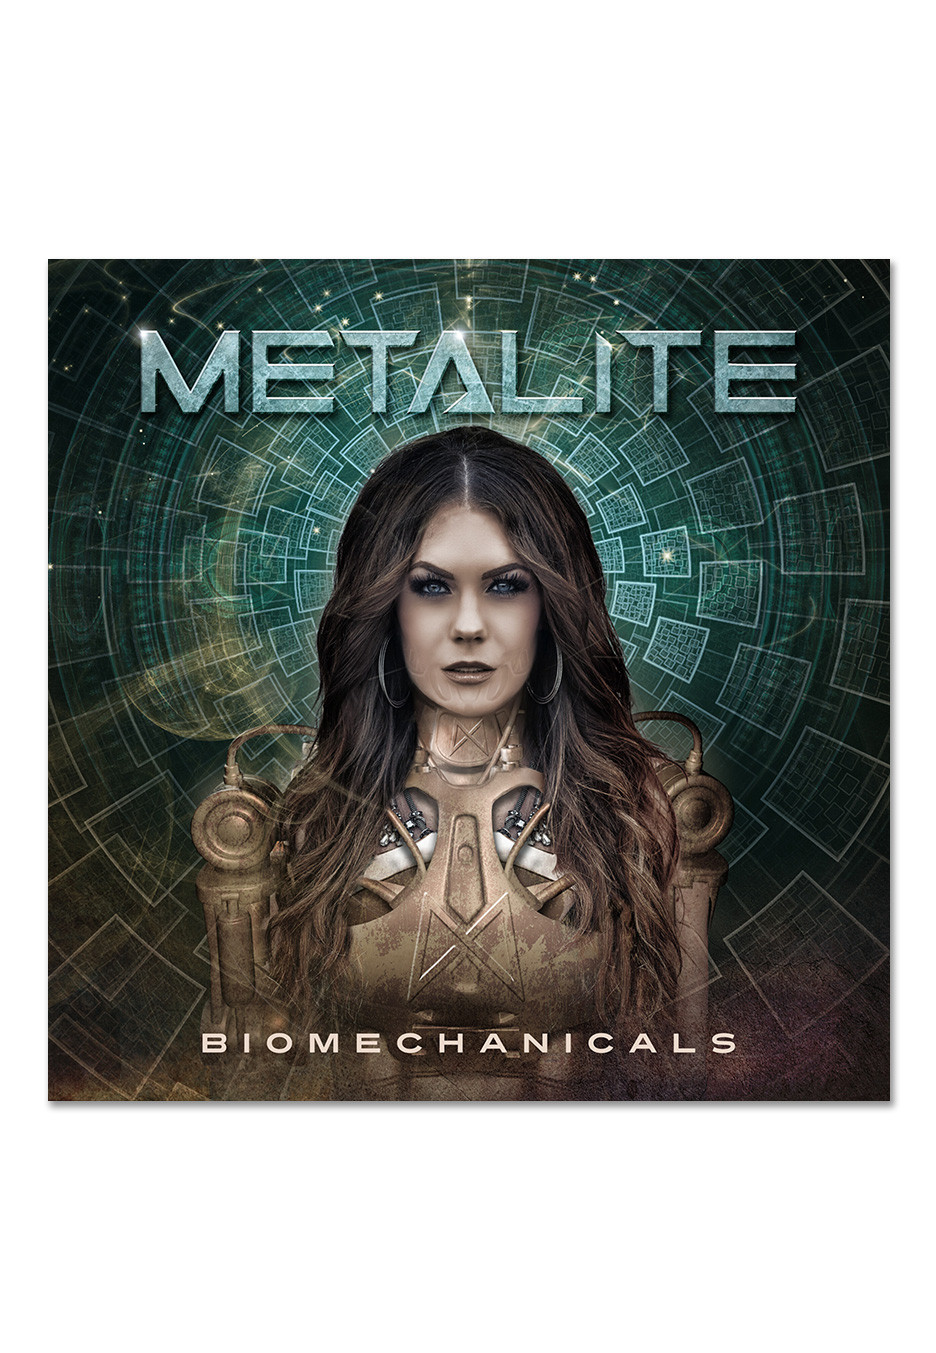 Metalite - Biomechanicals Ltd. Silver - Colored Vinyl